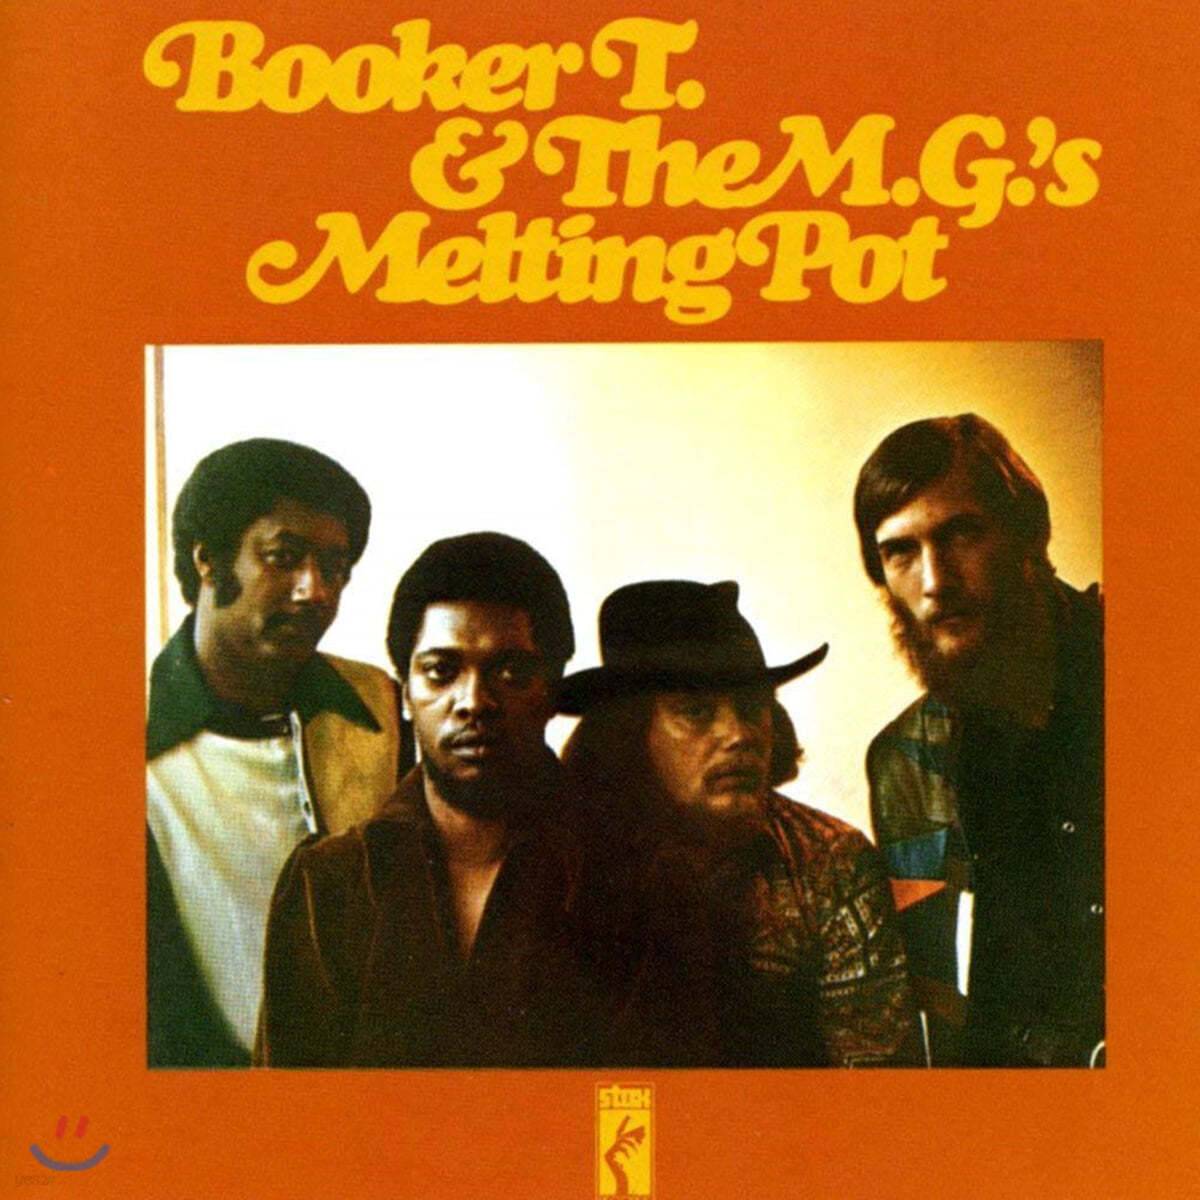 Booker T. & The M.G.'s (부커티 앤 더 엠지스) - Melting Pot [LP]